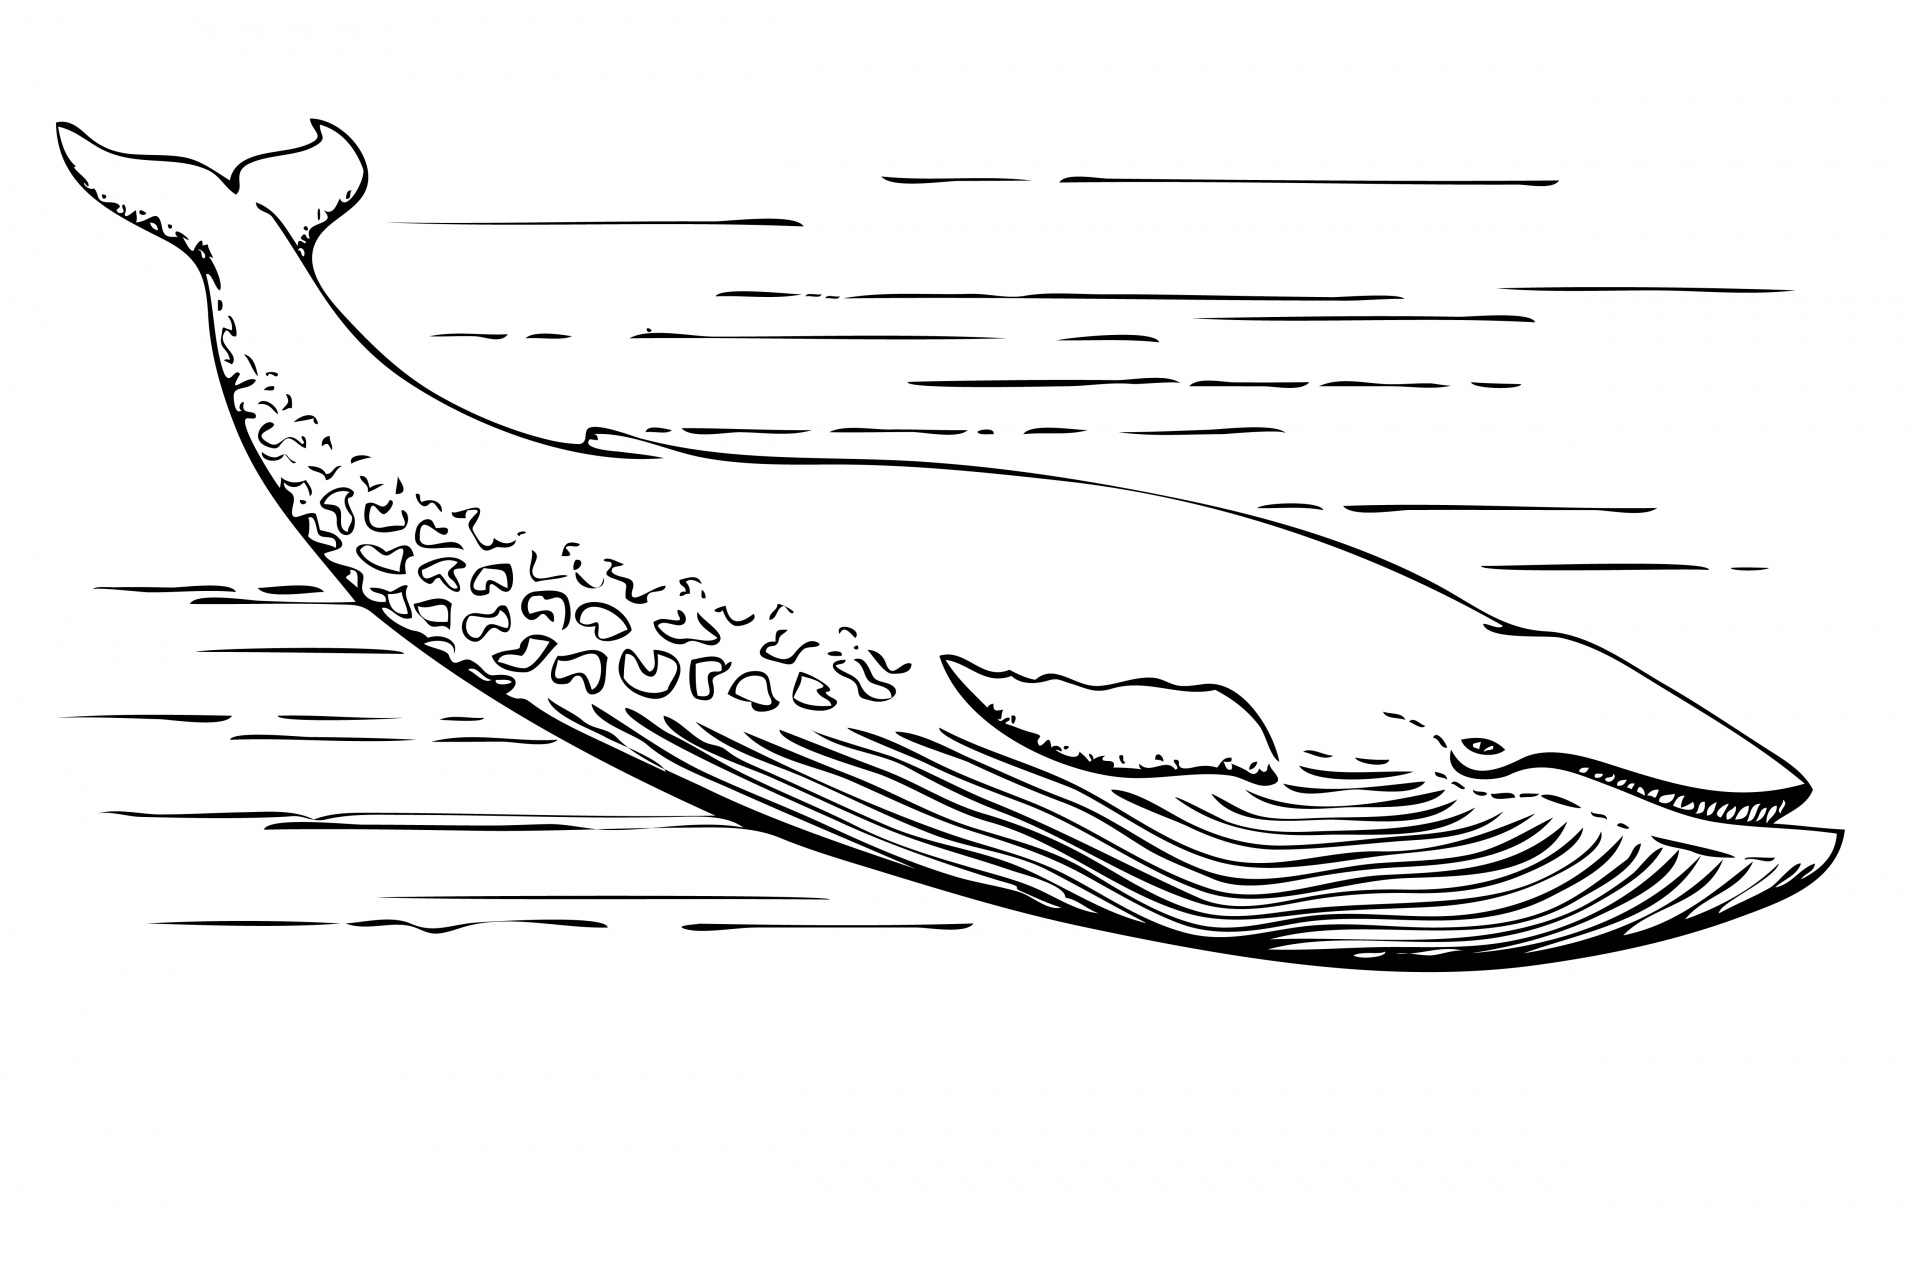 Blue Whale Illustration Clipart Free Stock Photo - Public ...